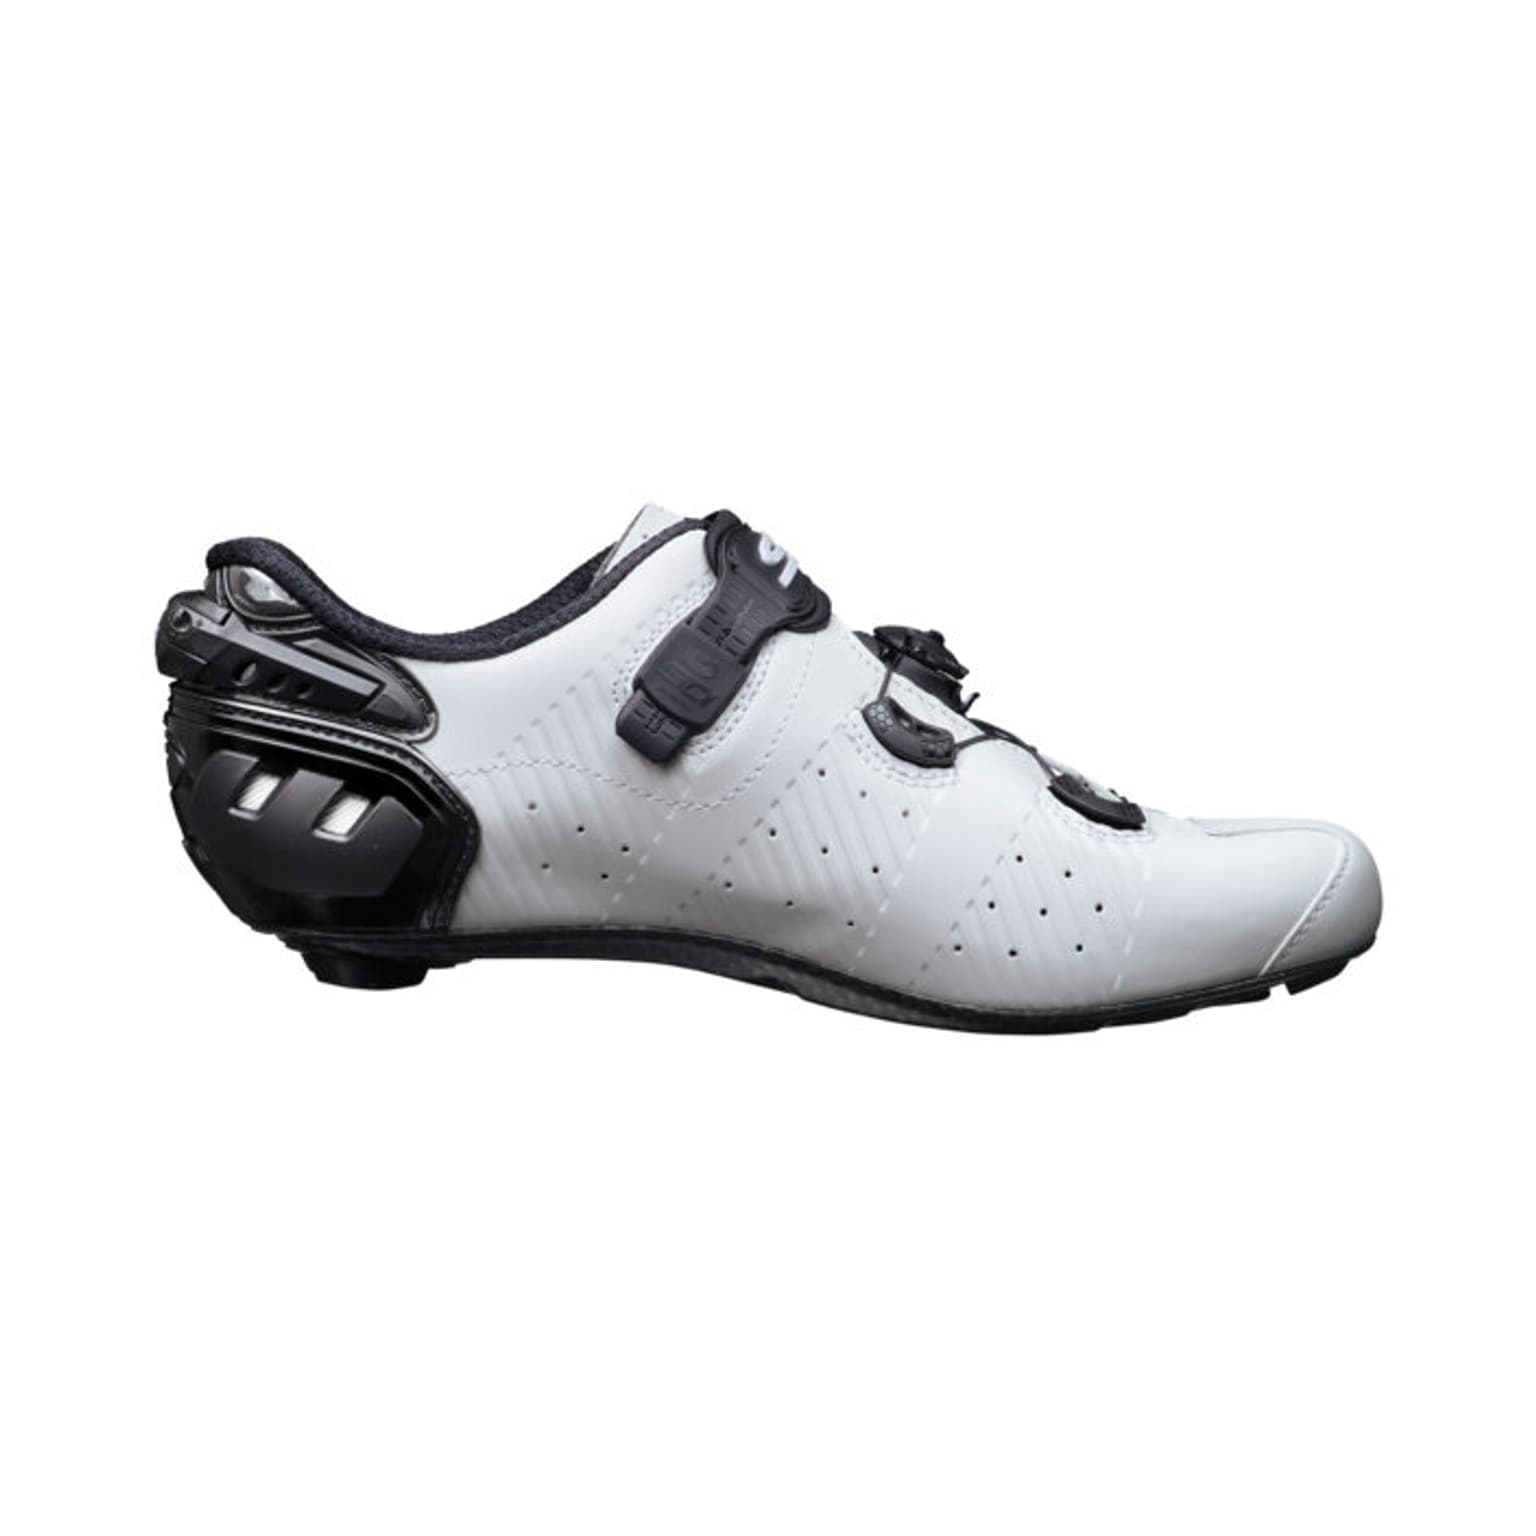 SIDI SIDI RR Wire 2S Woman Carbon Chaussures de cyclisme blanc 2